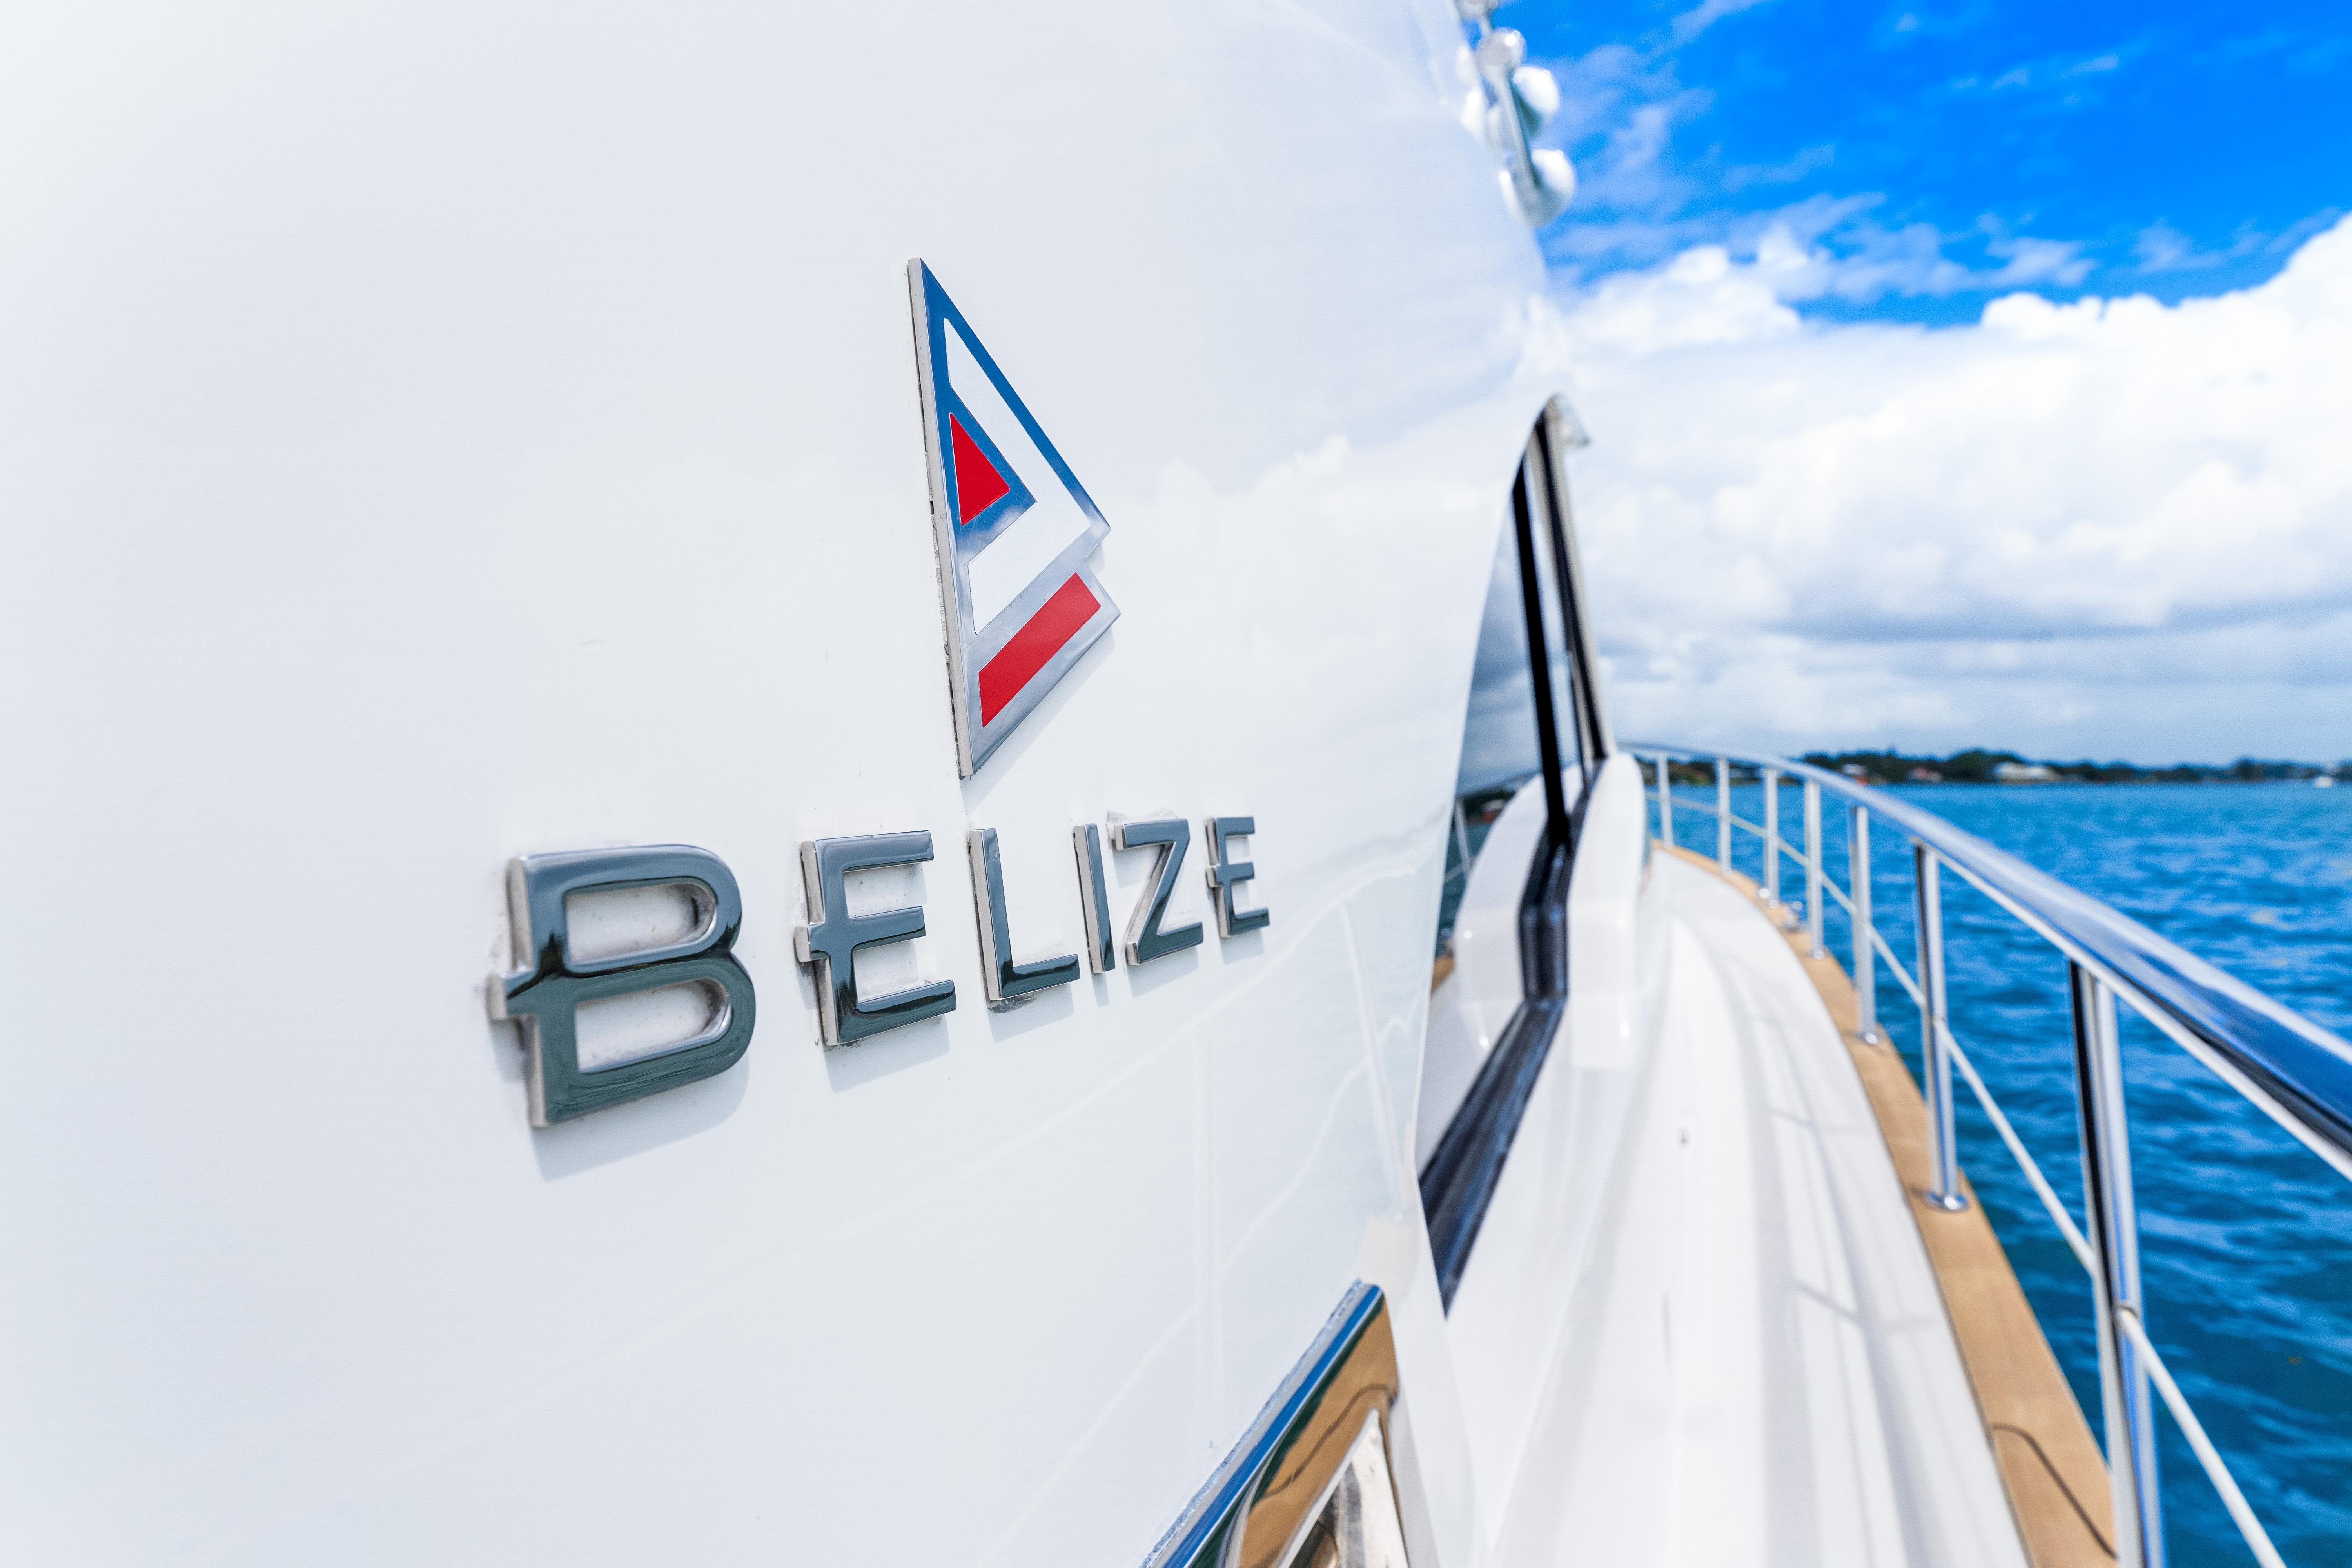 2015 Belize 54 Daybridge Motor Yachts for sale - YachtWorld